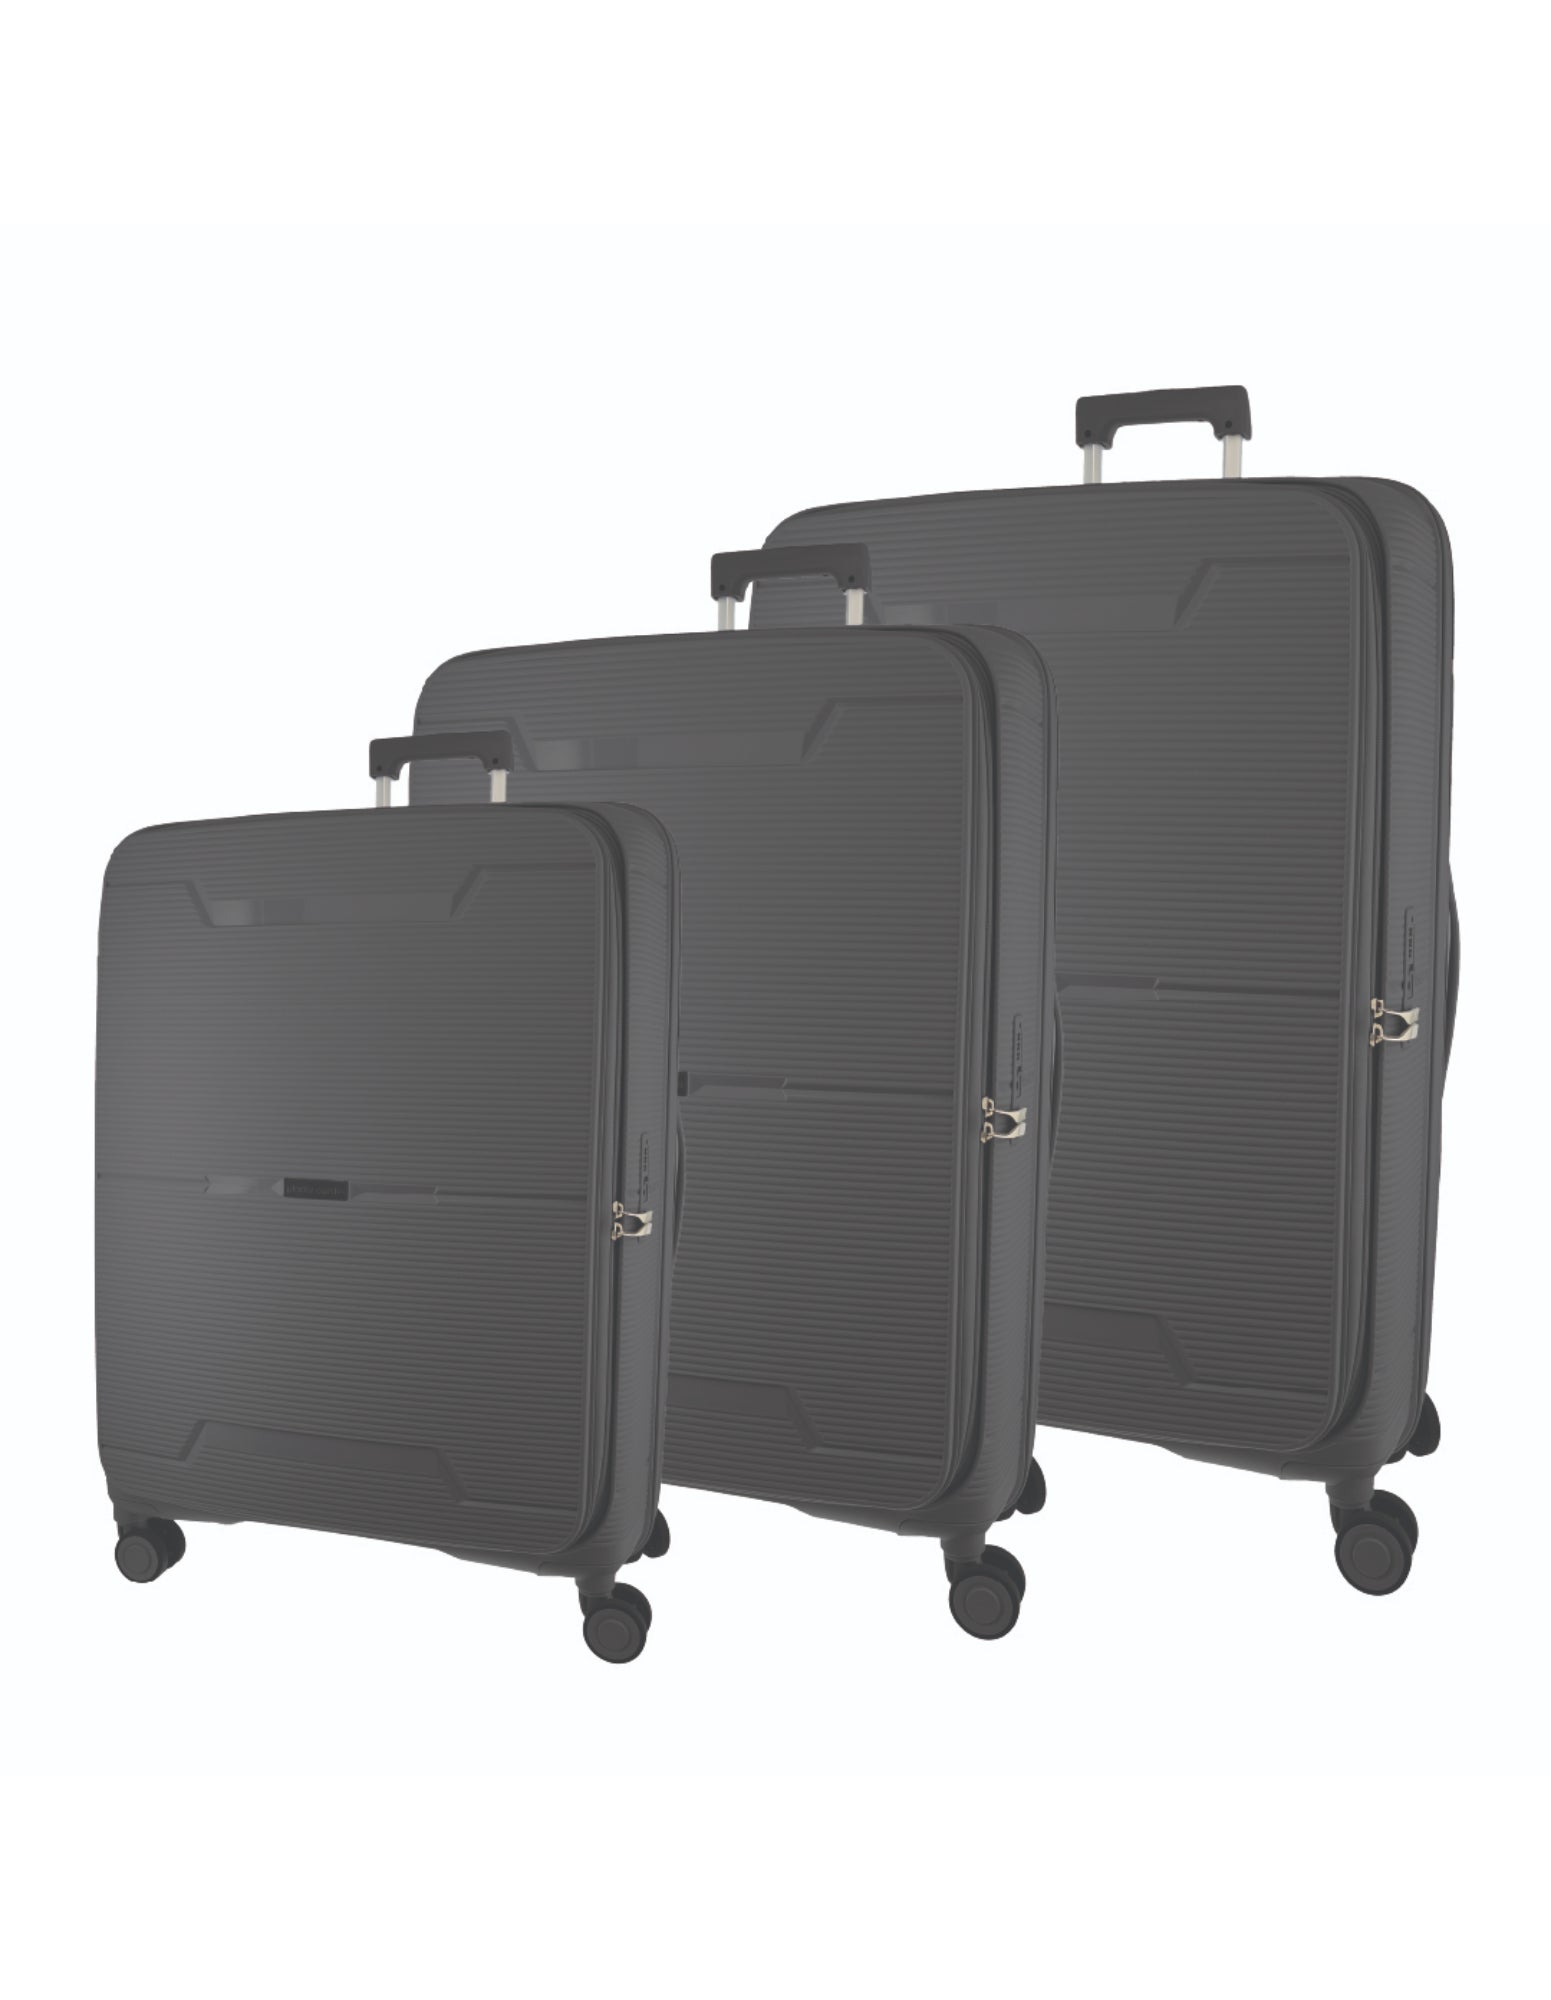 Pierre Cardin Hard-Shell 3-Piece Luggage Set in Graphite